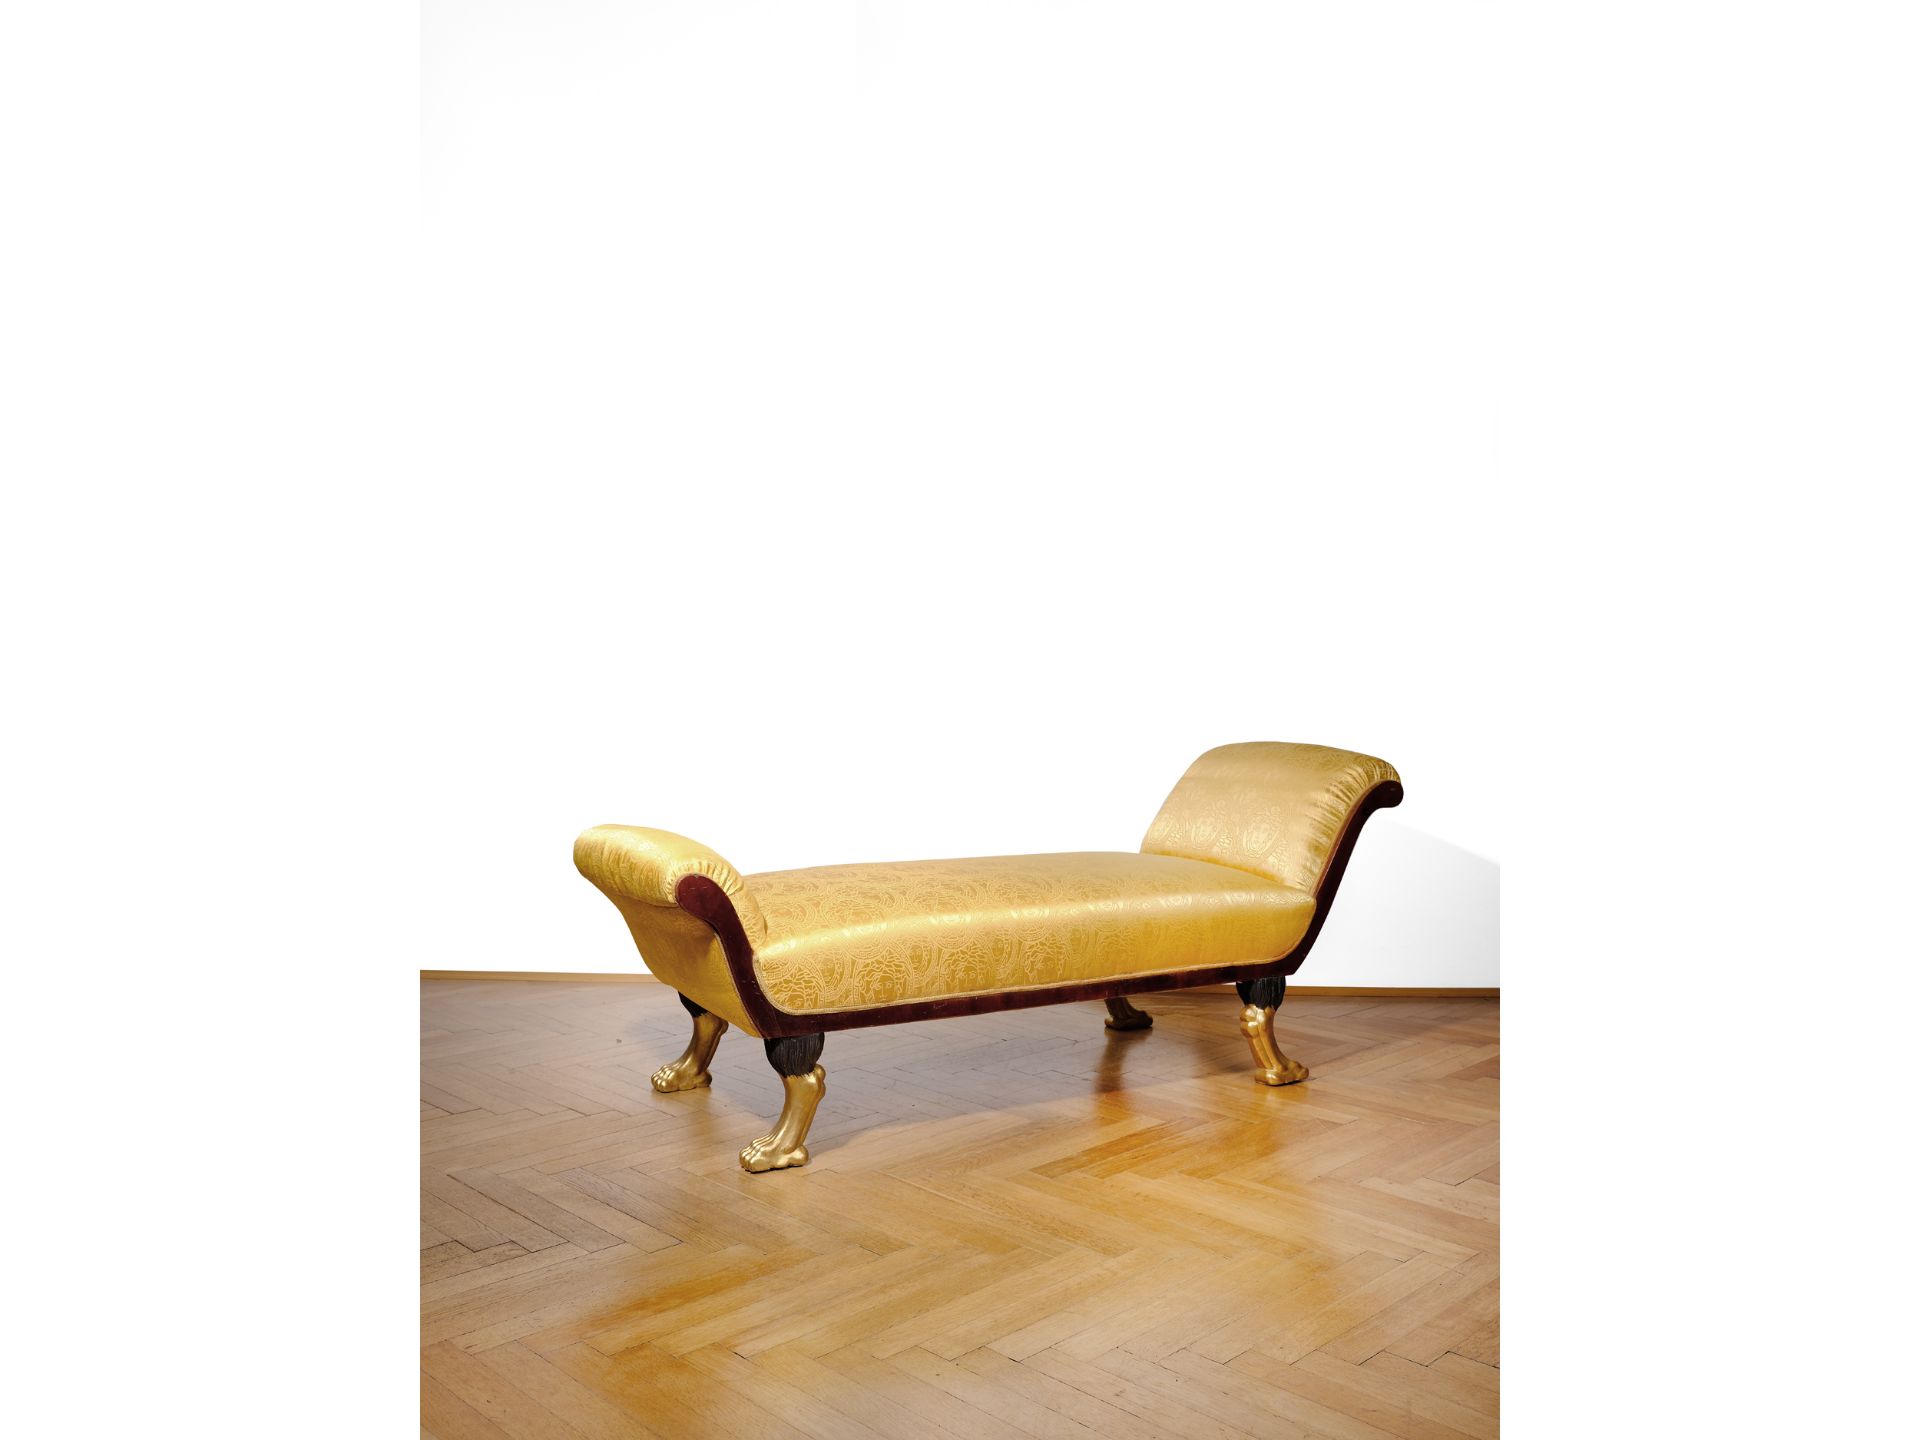 Chaise longue, German or French, Biedermeier